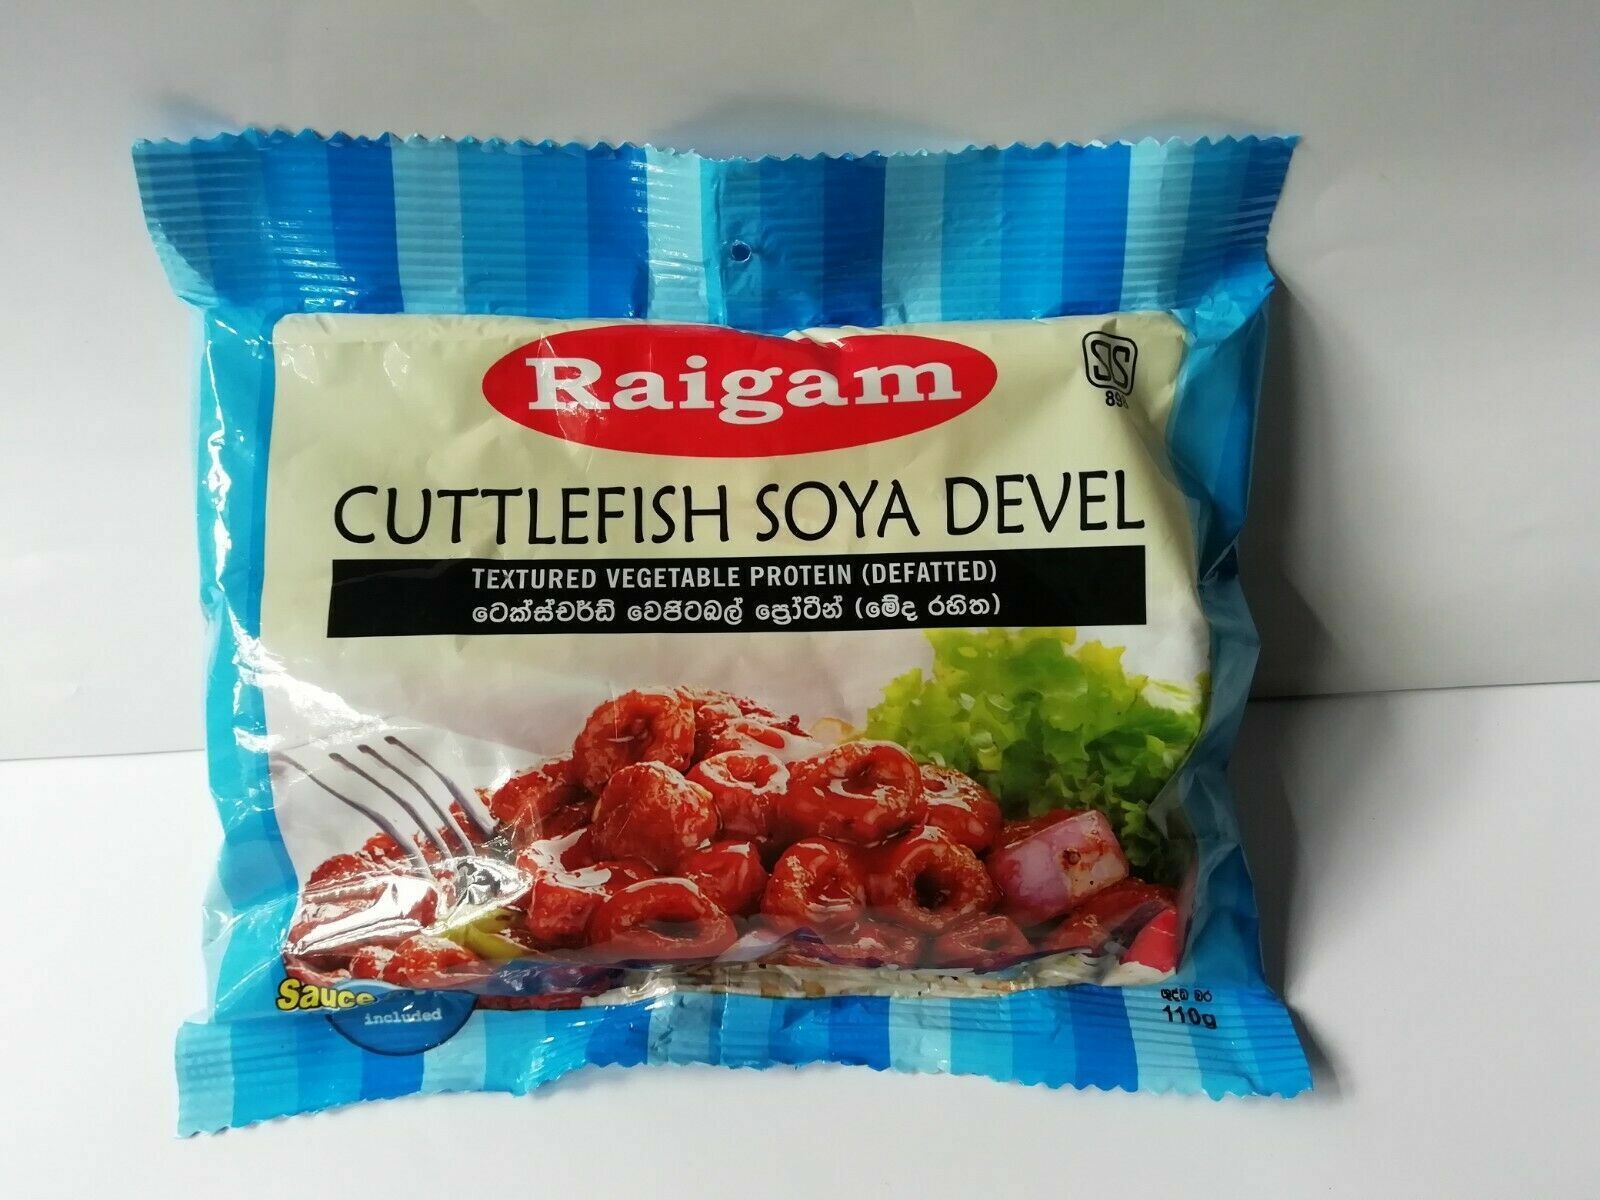 Raigam Soya Meat Devel Cuttlefish Flavored Sri Lankan Product 110g